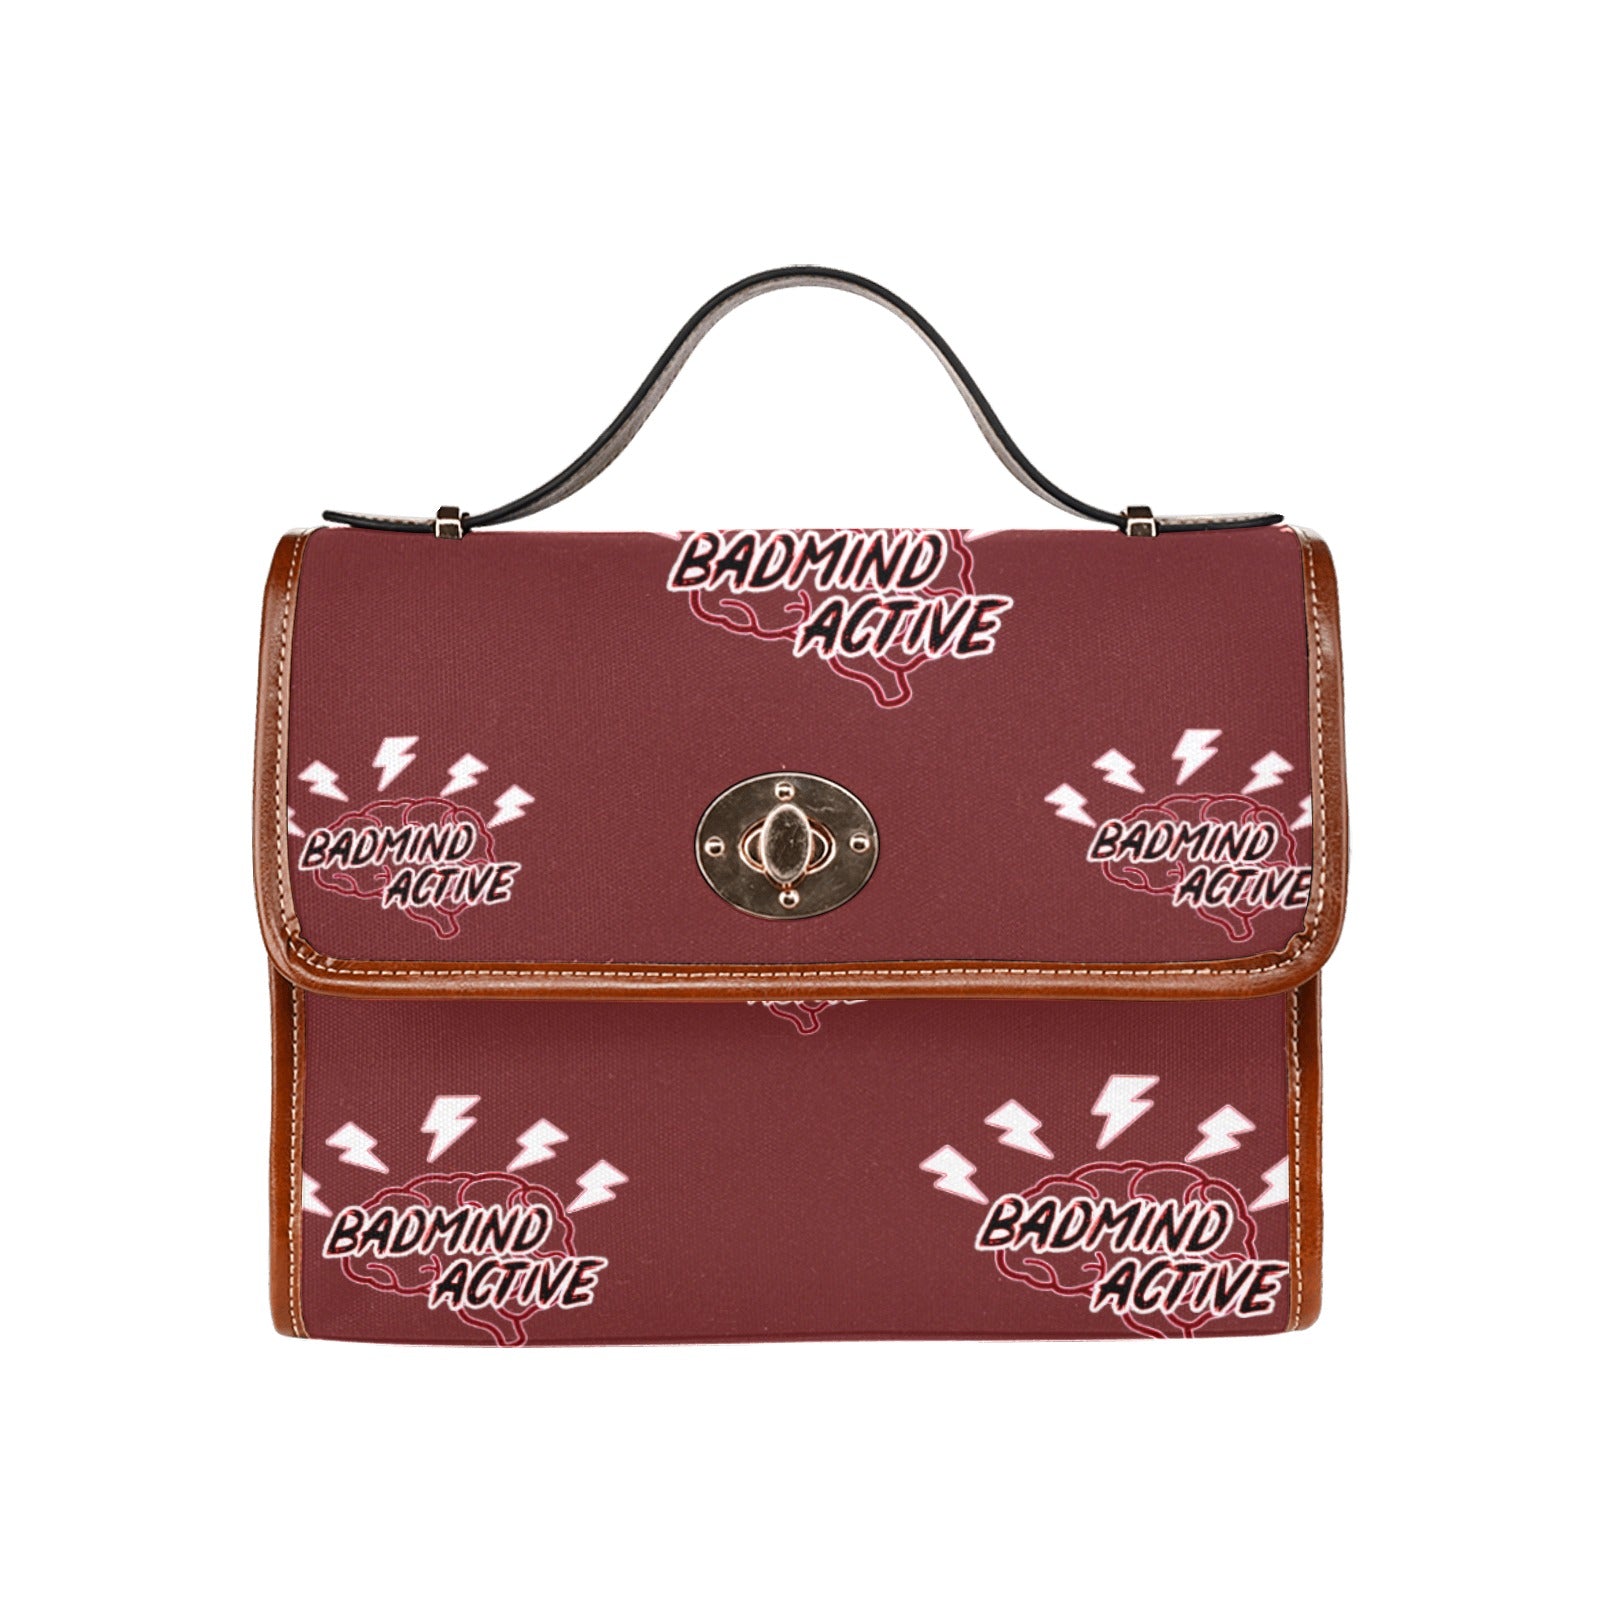 fz mind handbag one size / fz - mind bag-burgundy all over print waterproof canvas bag(model1641)(brown strap)